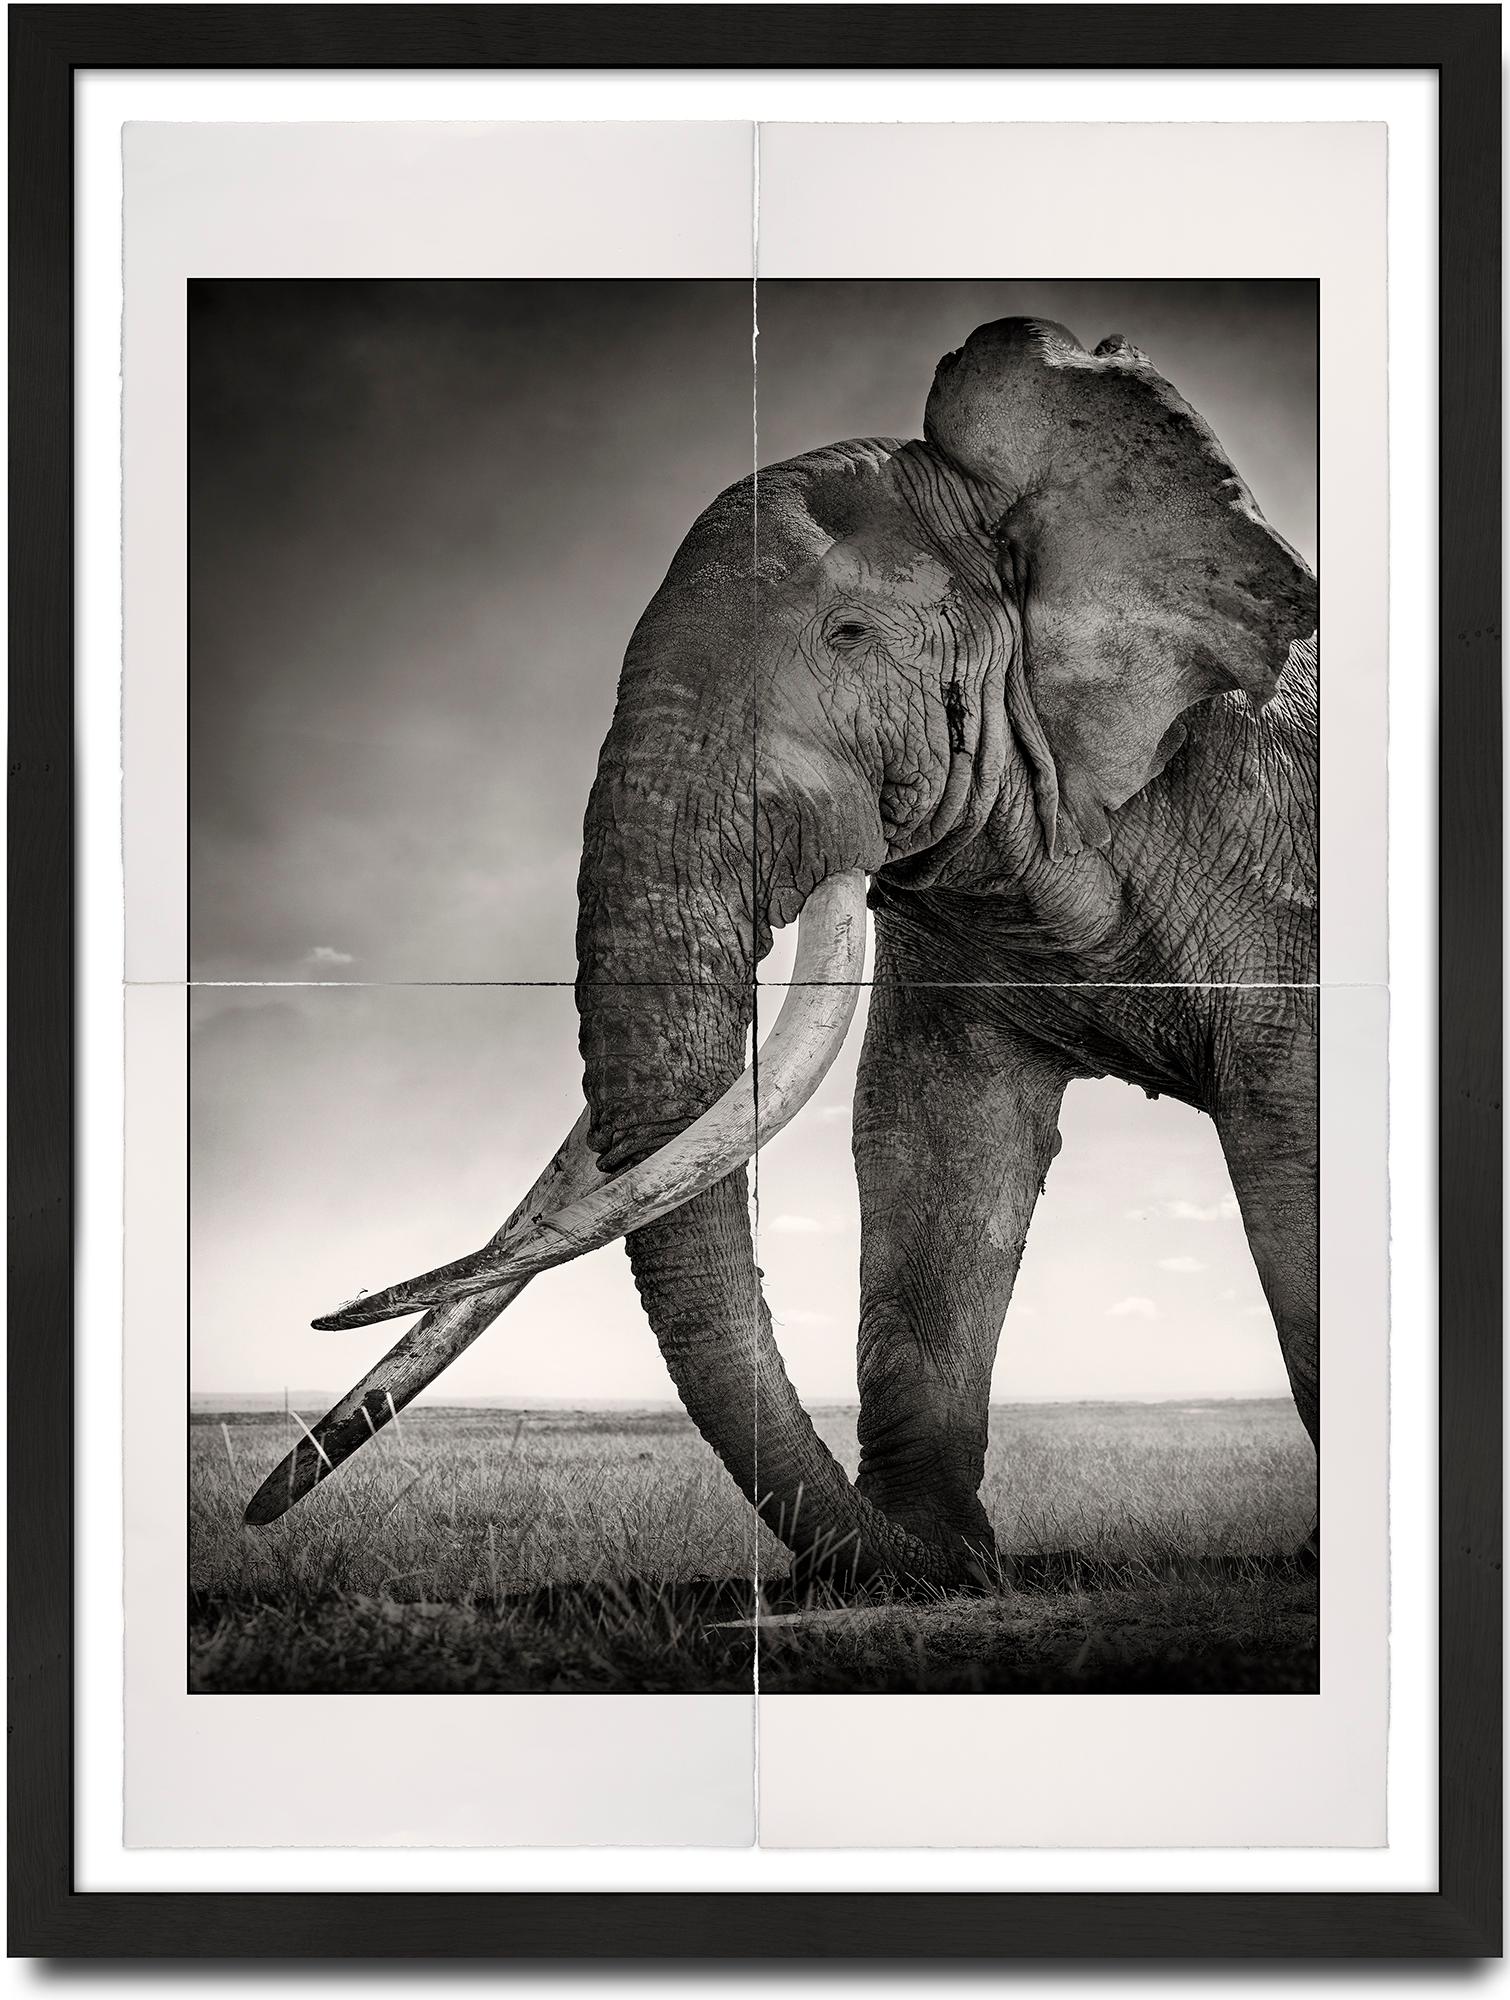 Joachim Schmeisser Portrait Photograph - Tim - Guardian of Eden, Platinum, animal, elephant, black and white photography